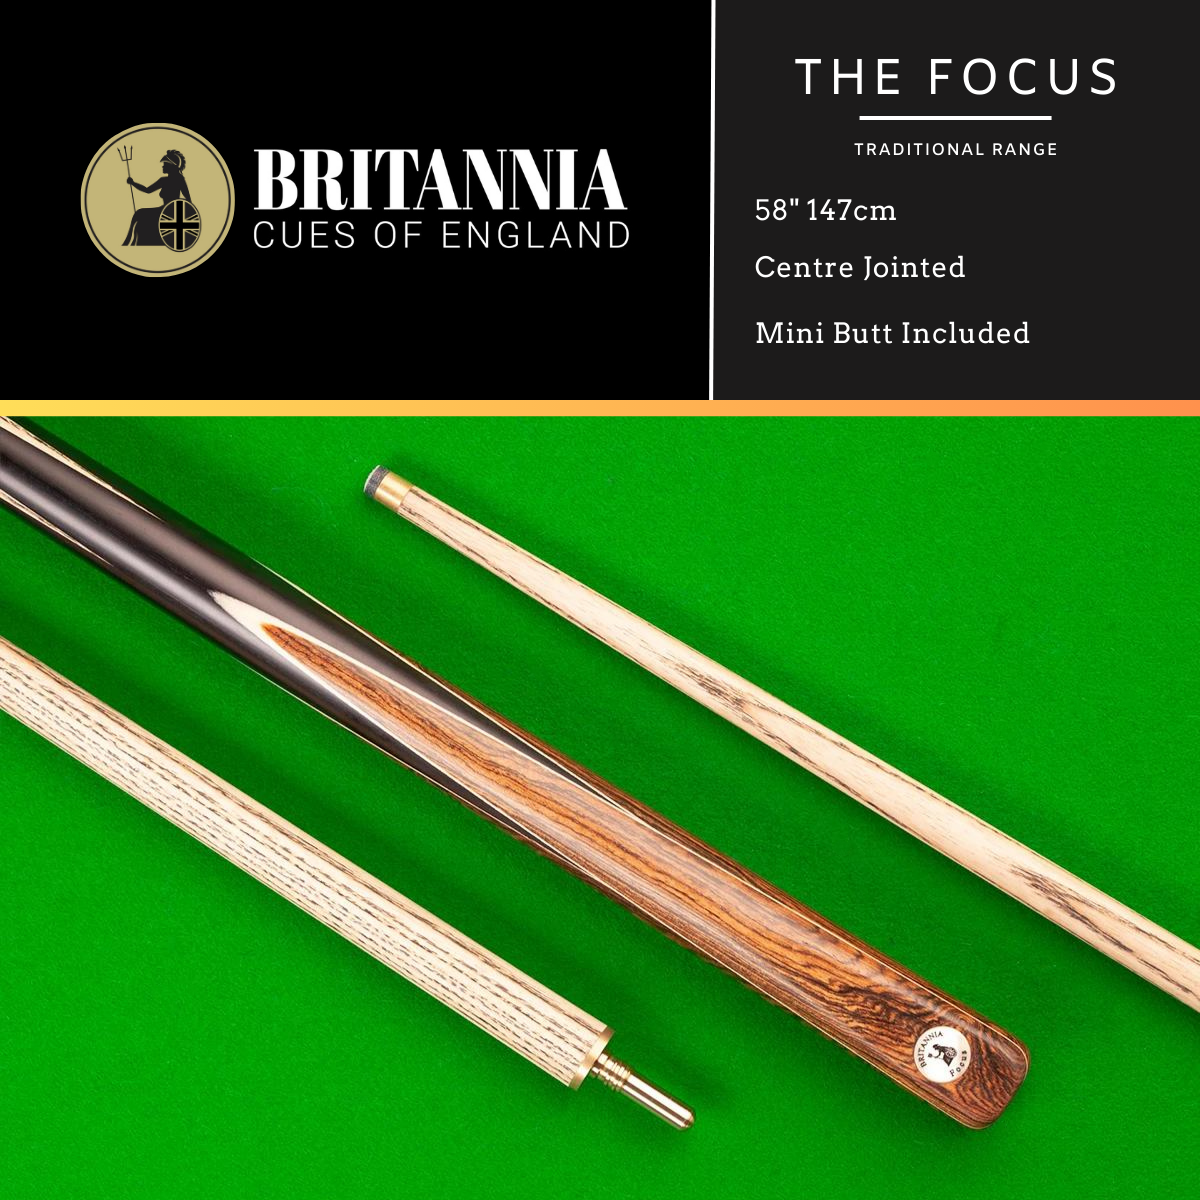 Britannia Centre Jointed Focus Traditional Snooker Cue